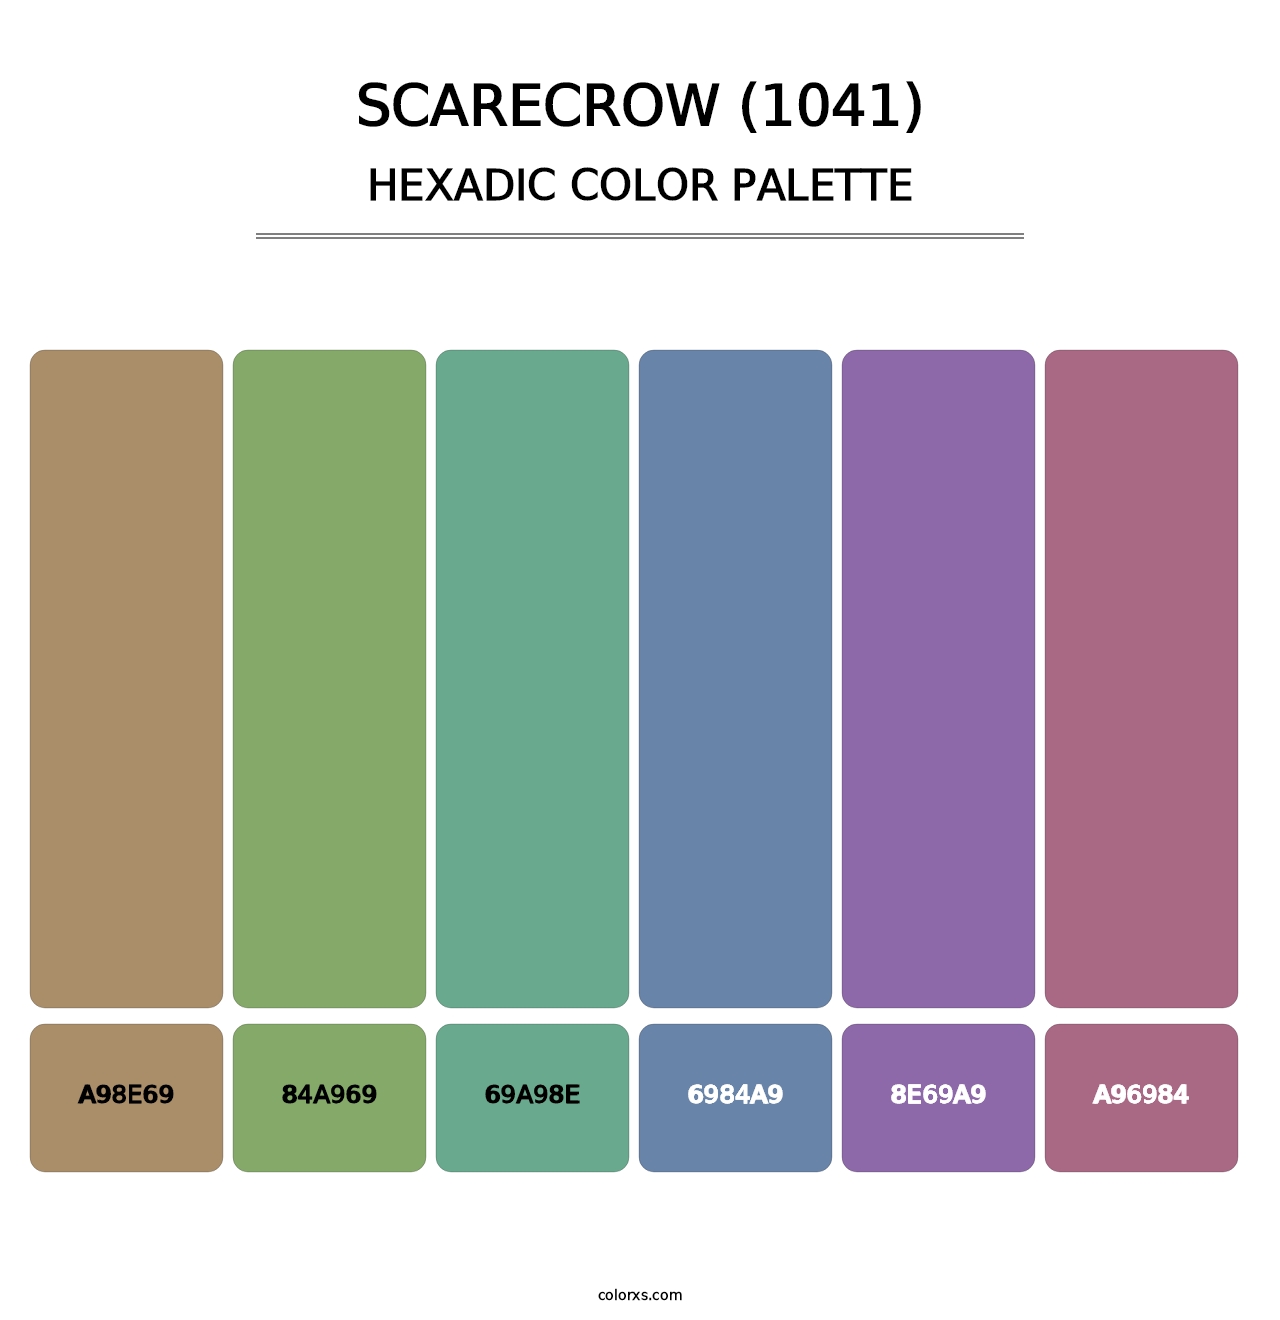 Scarecrow (1041) - Hexadic Color Palette